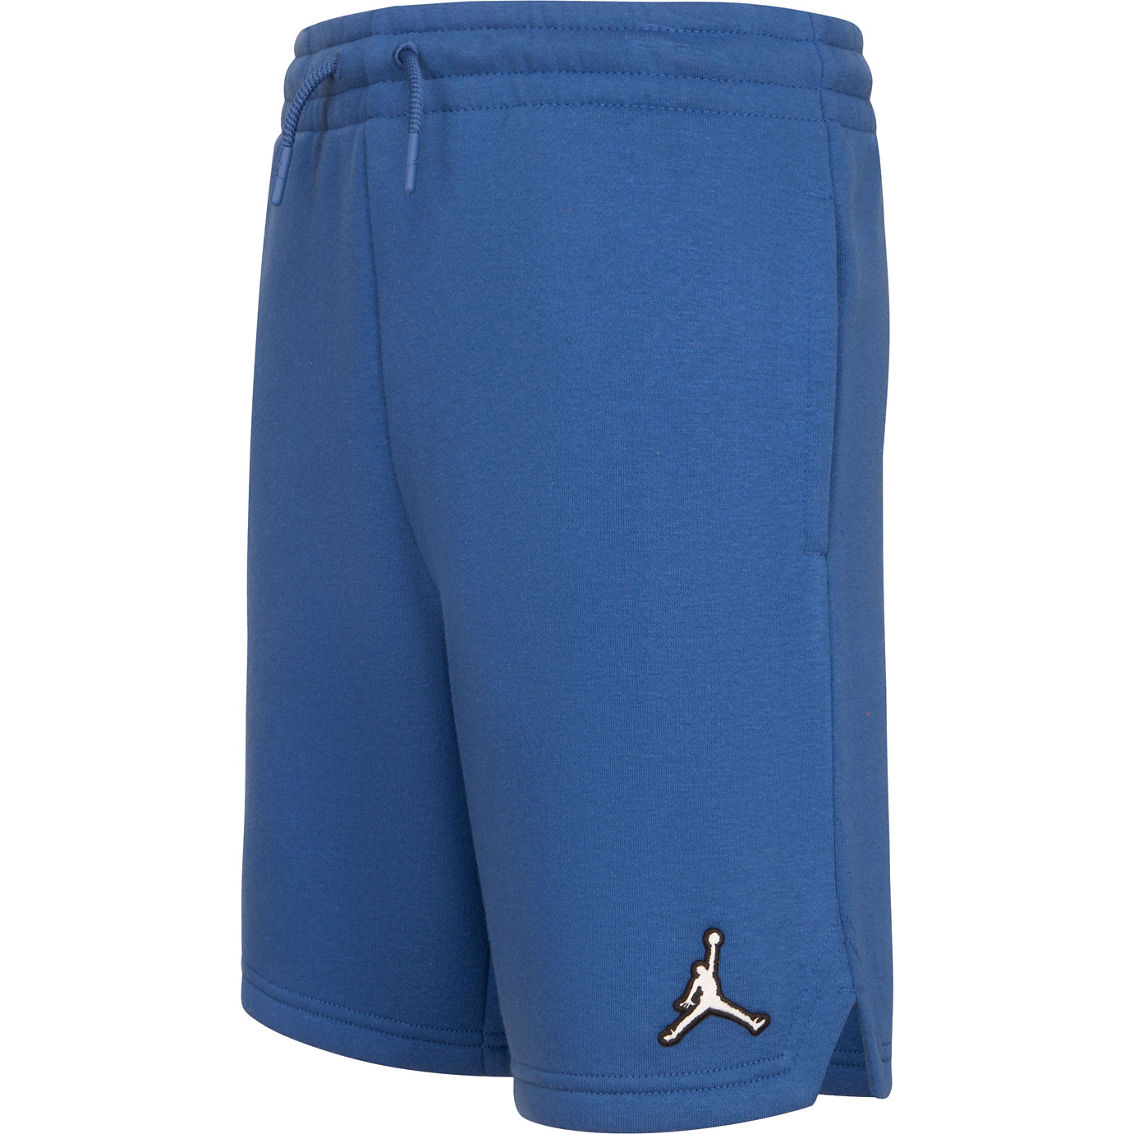 Jordan Boys Essentials Shorts - Image 3 of 3